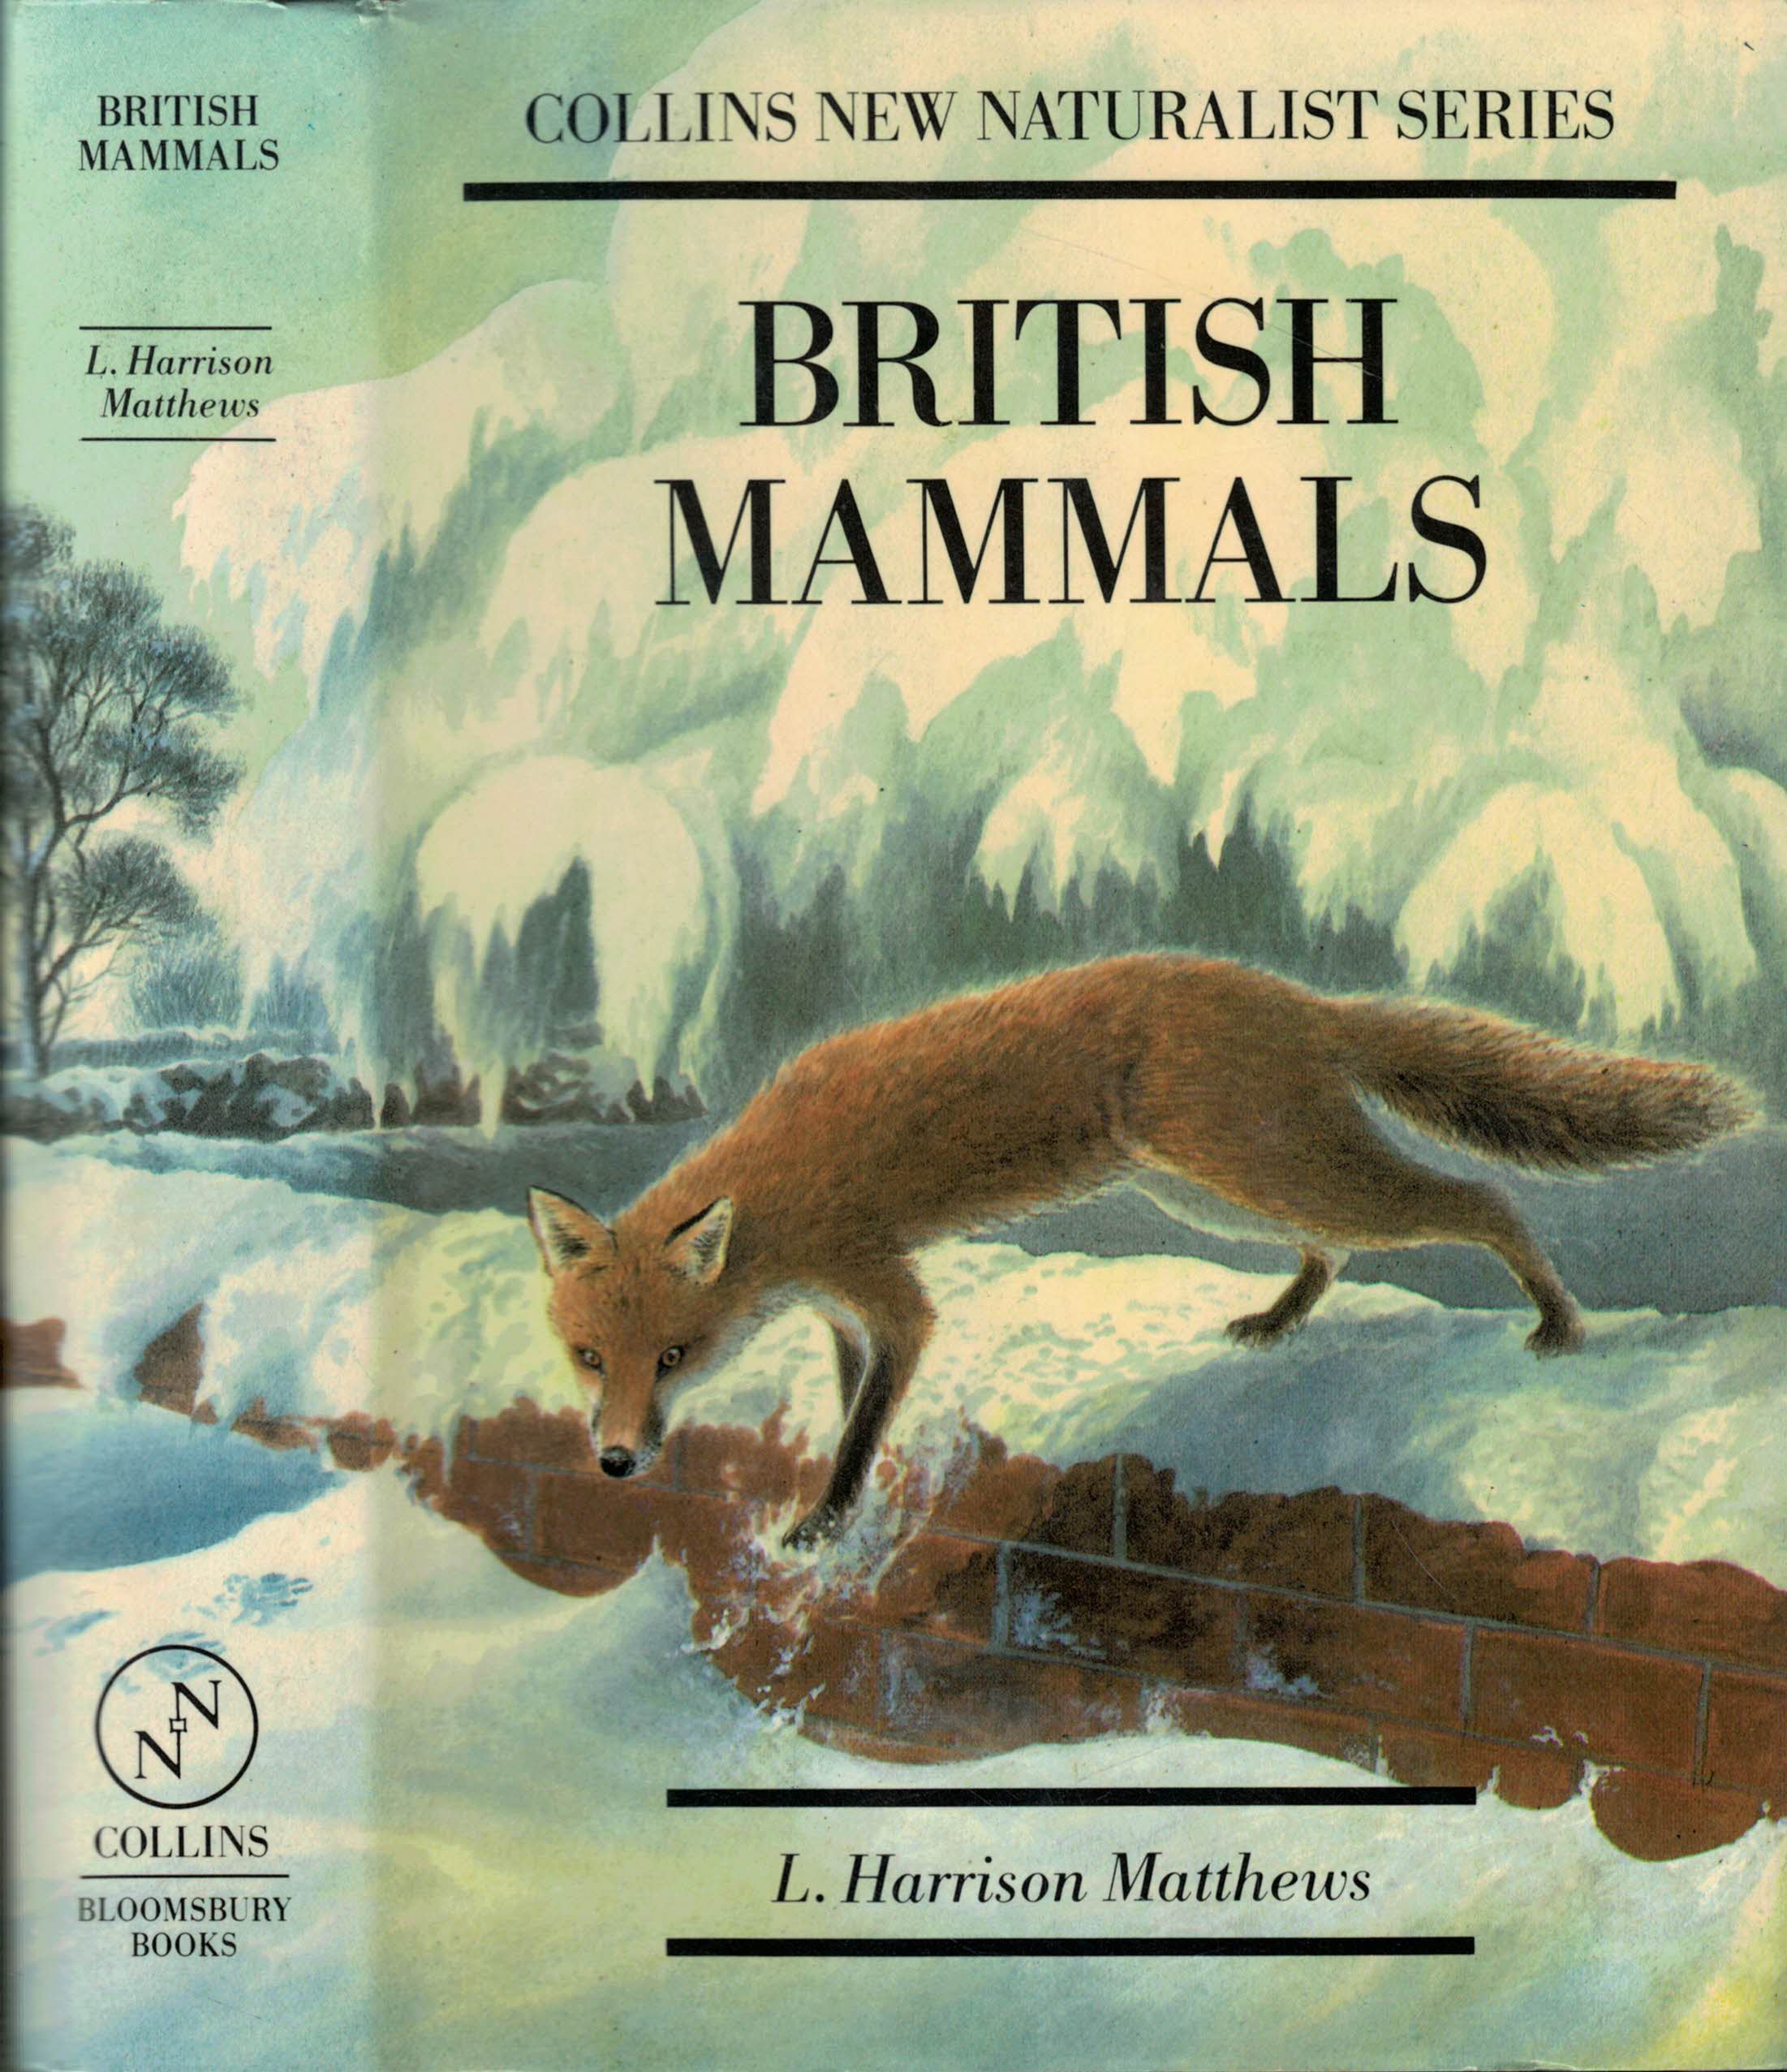 British Mammals. New Naturalist No. 21. Bloomsbury edition.